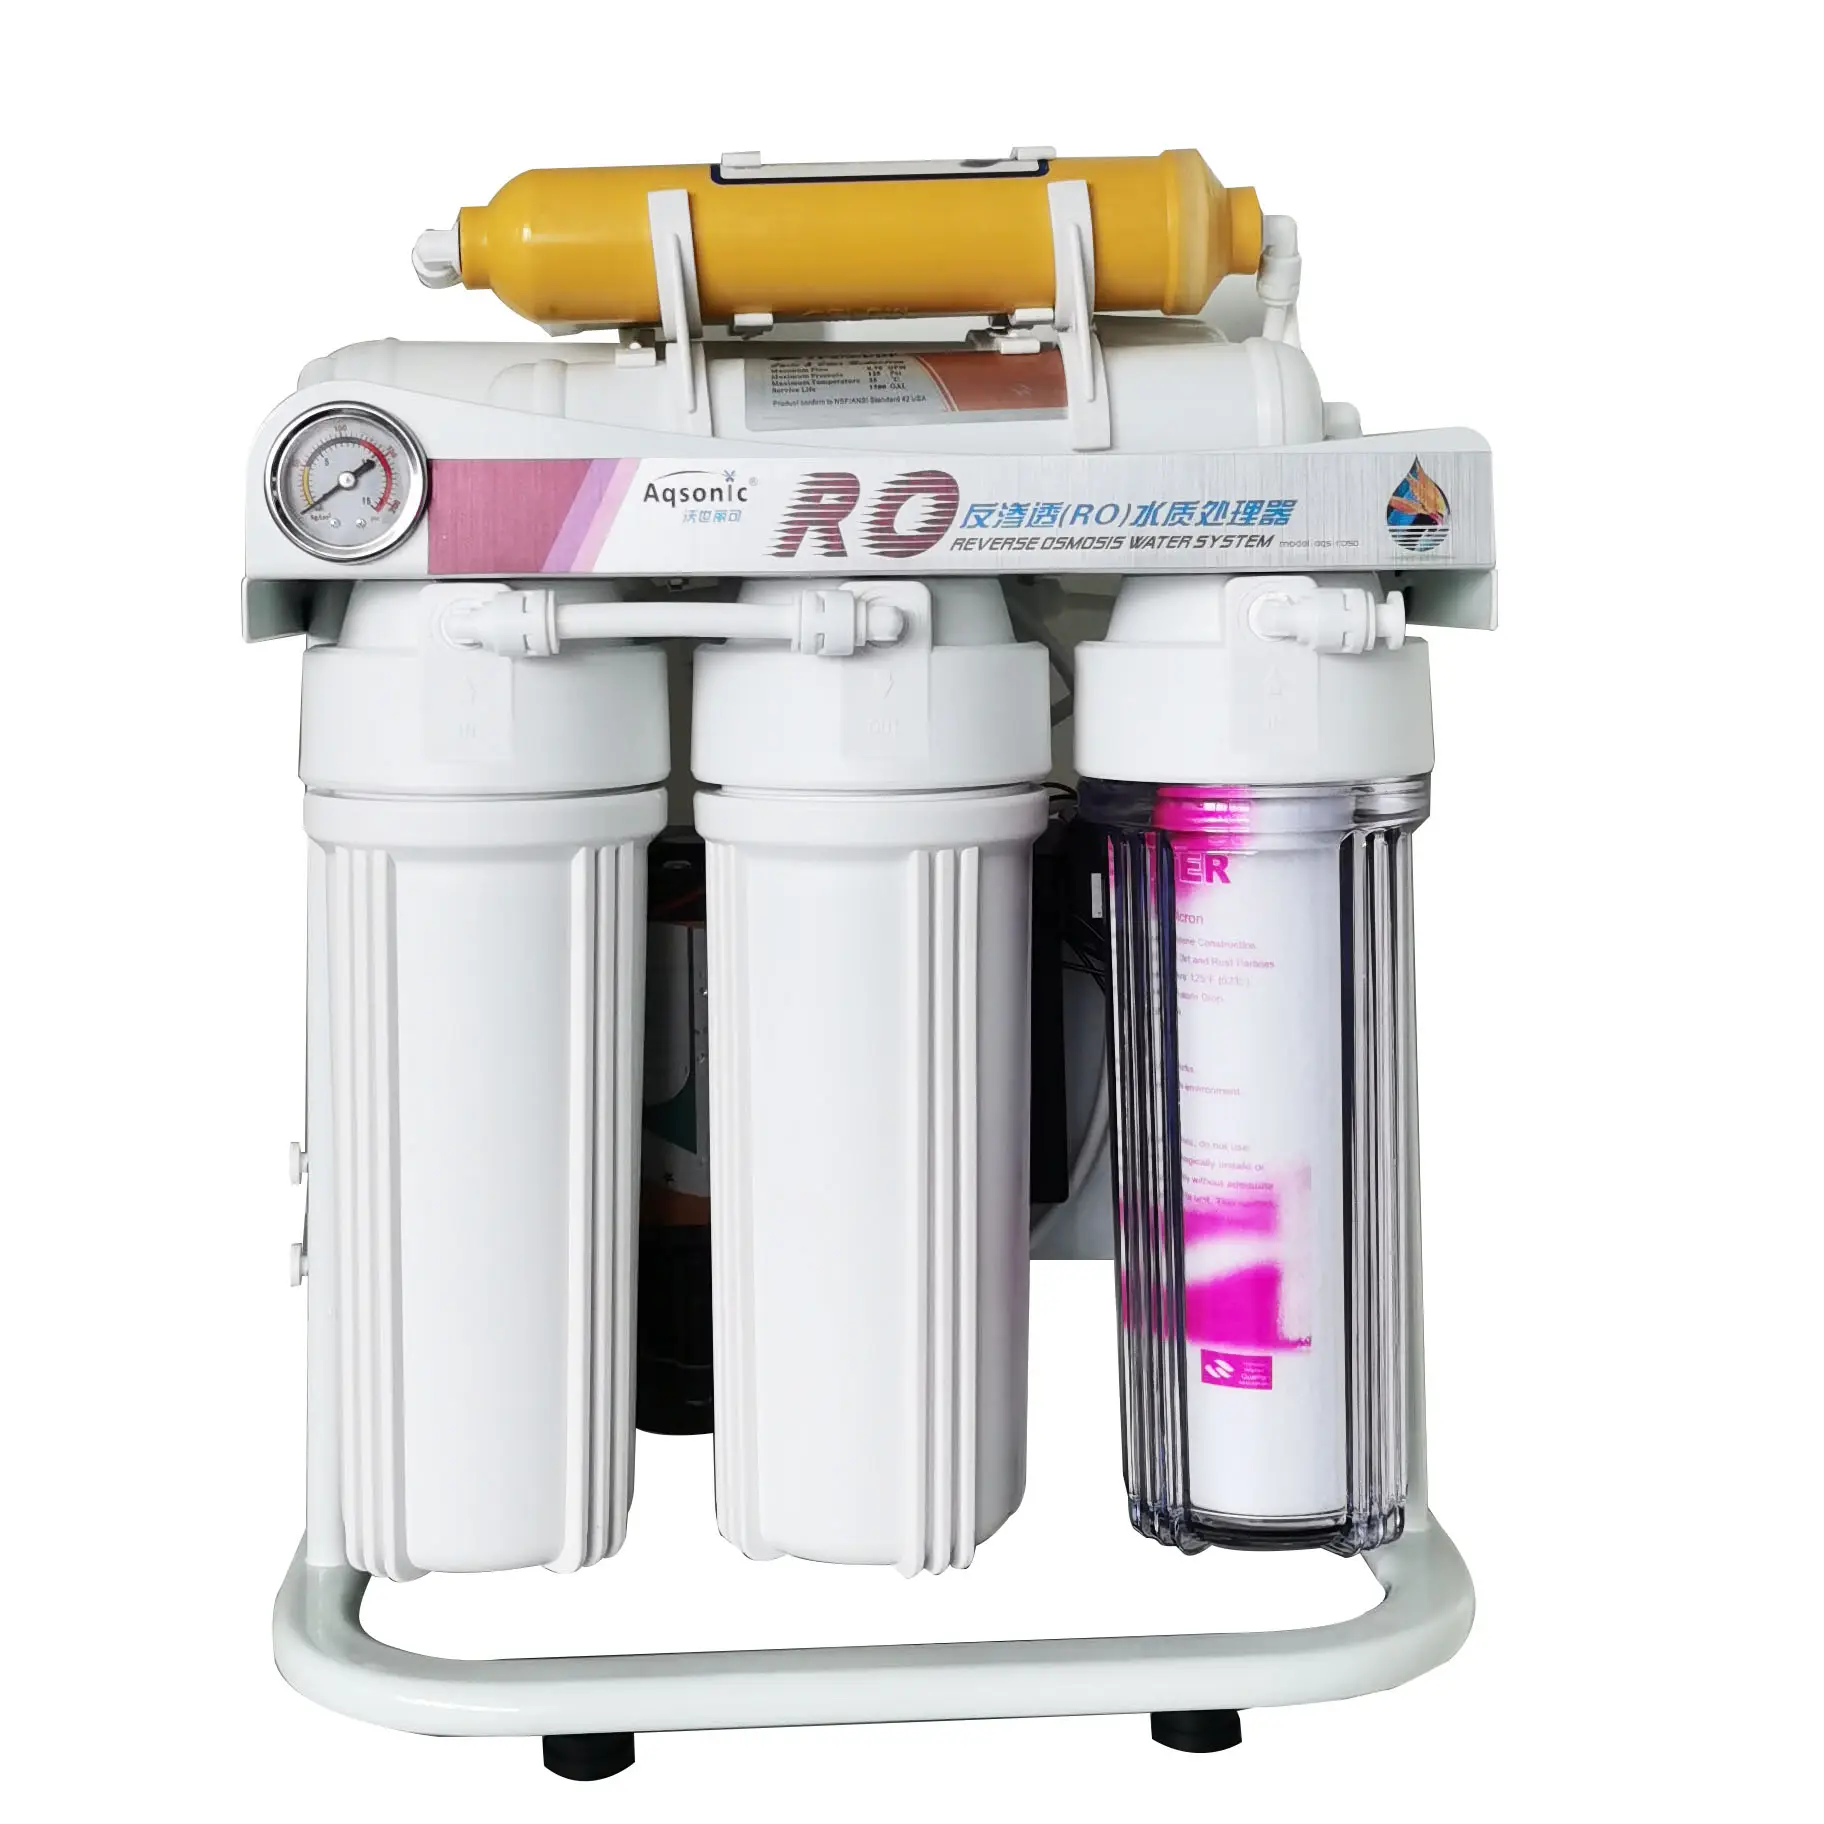 6 aşamalı UV filtre su arıtma sistemi 600 galon ters osmoz ev su arıtıcısı manuel güç ön filtrasyon